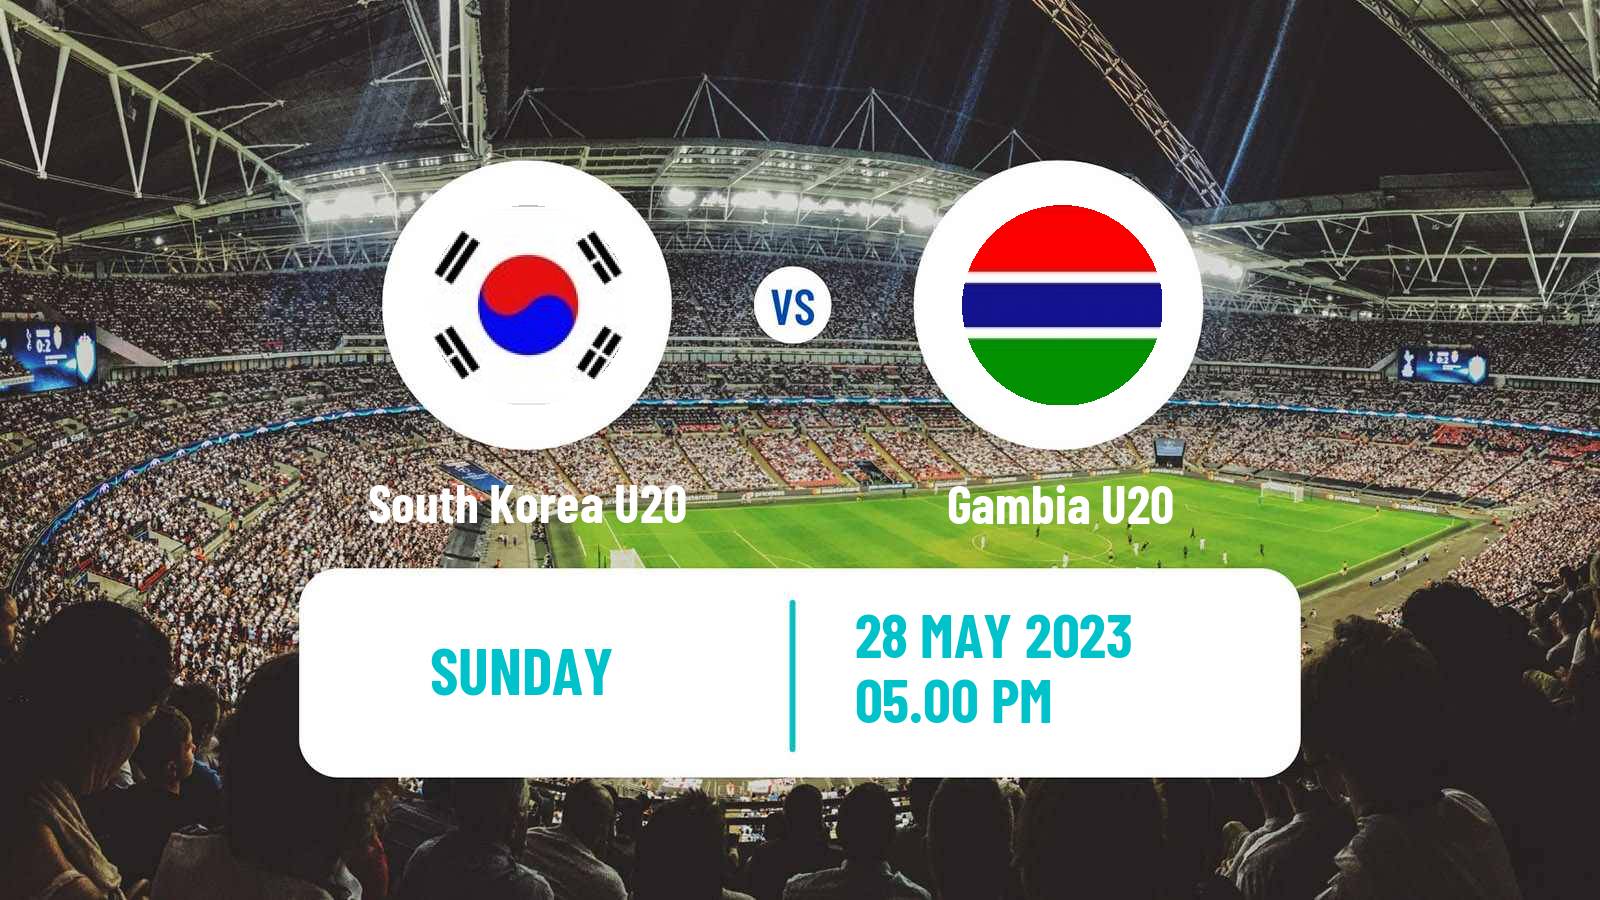 Soccer FIFA World Cup U20 South Korea U20 - Gambia U20